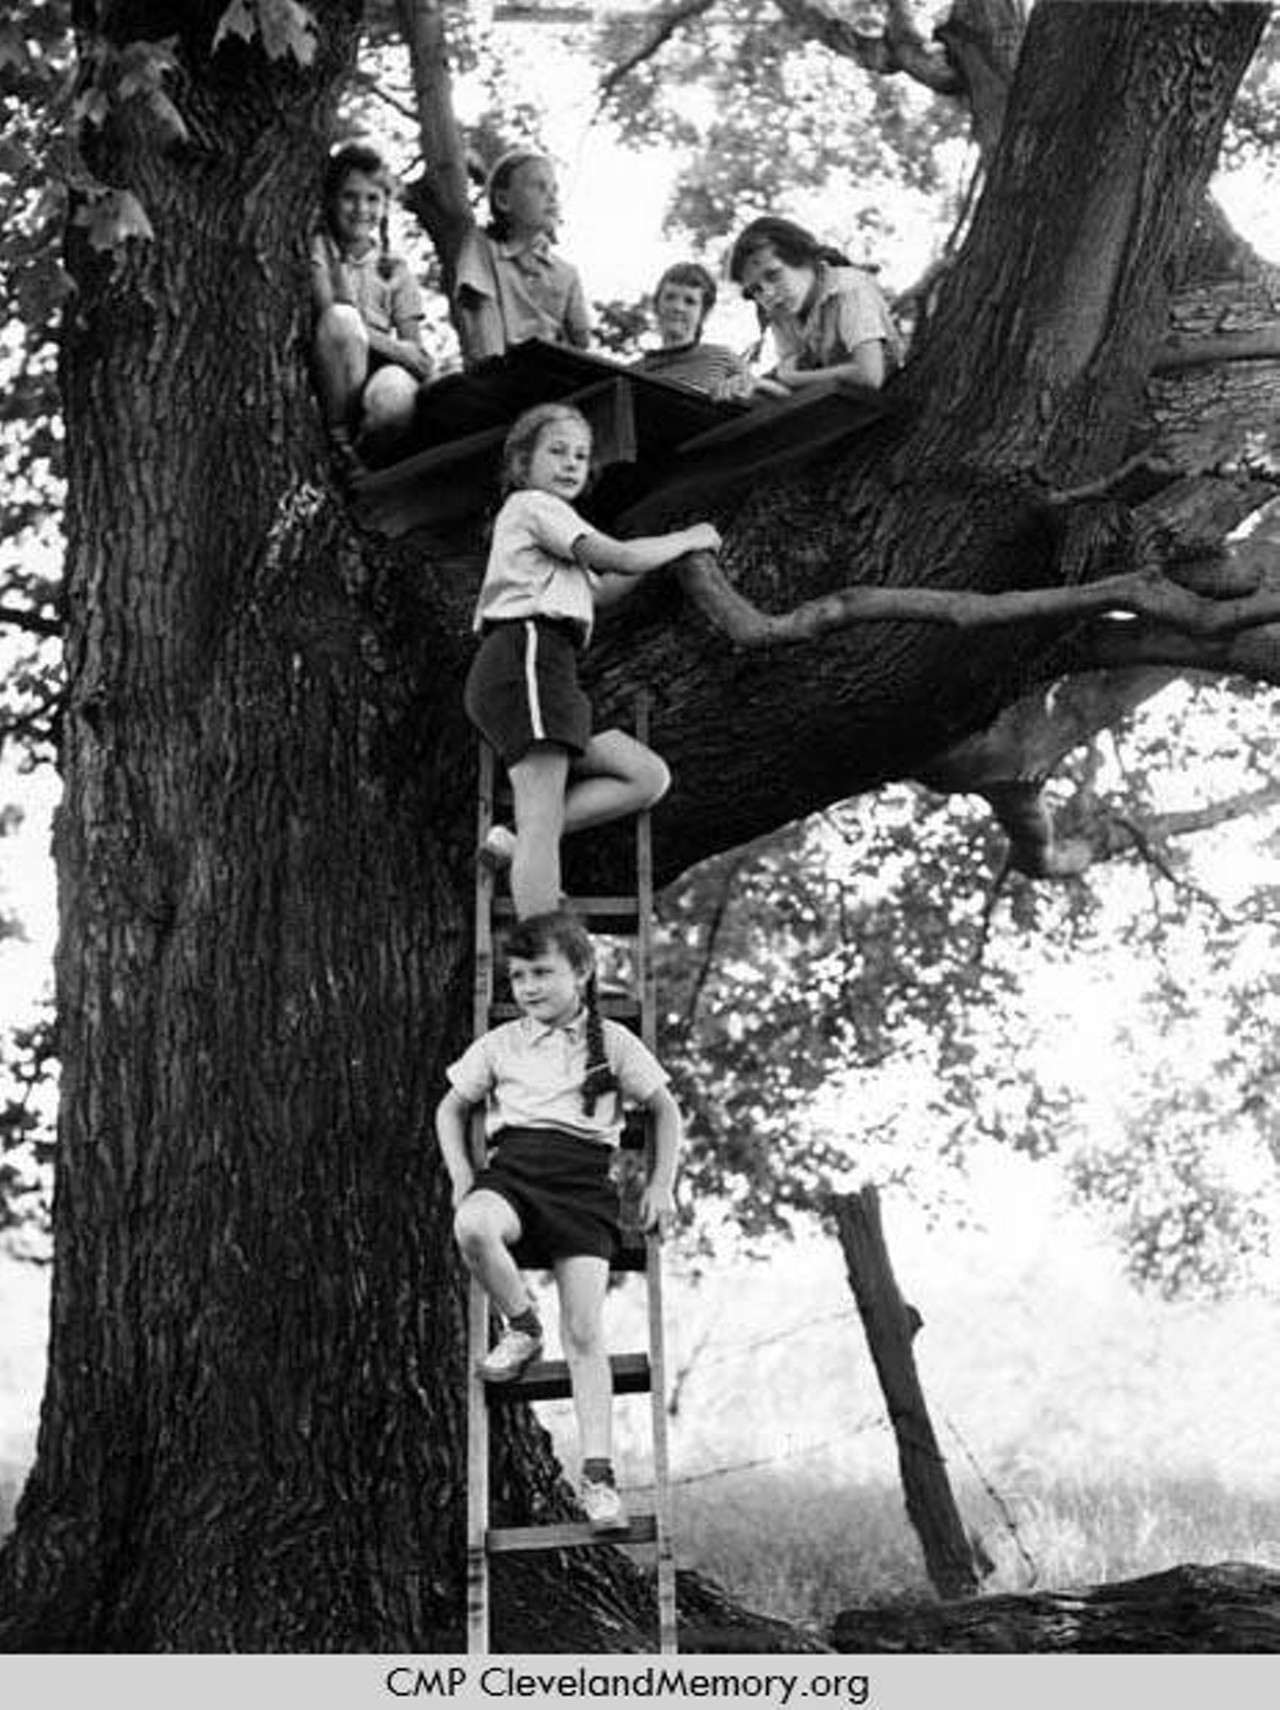  Climbing a Tree, Richfield, 1942